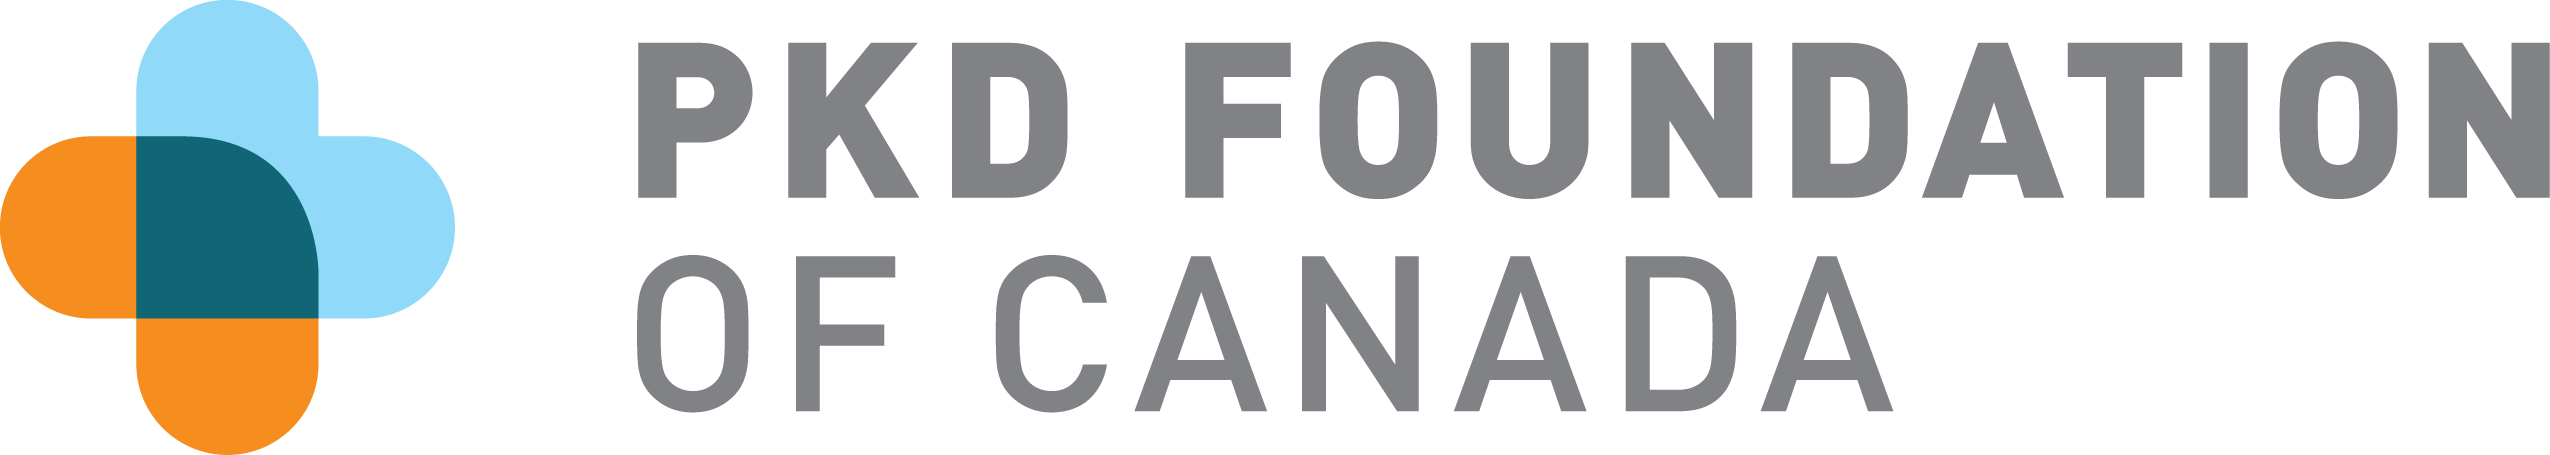 PKD Foundation of Canada logo